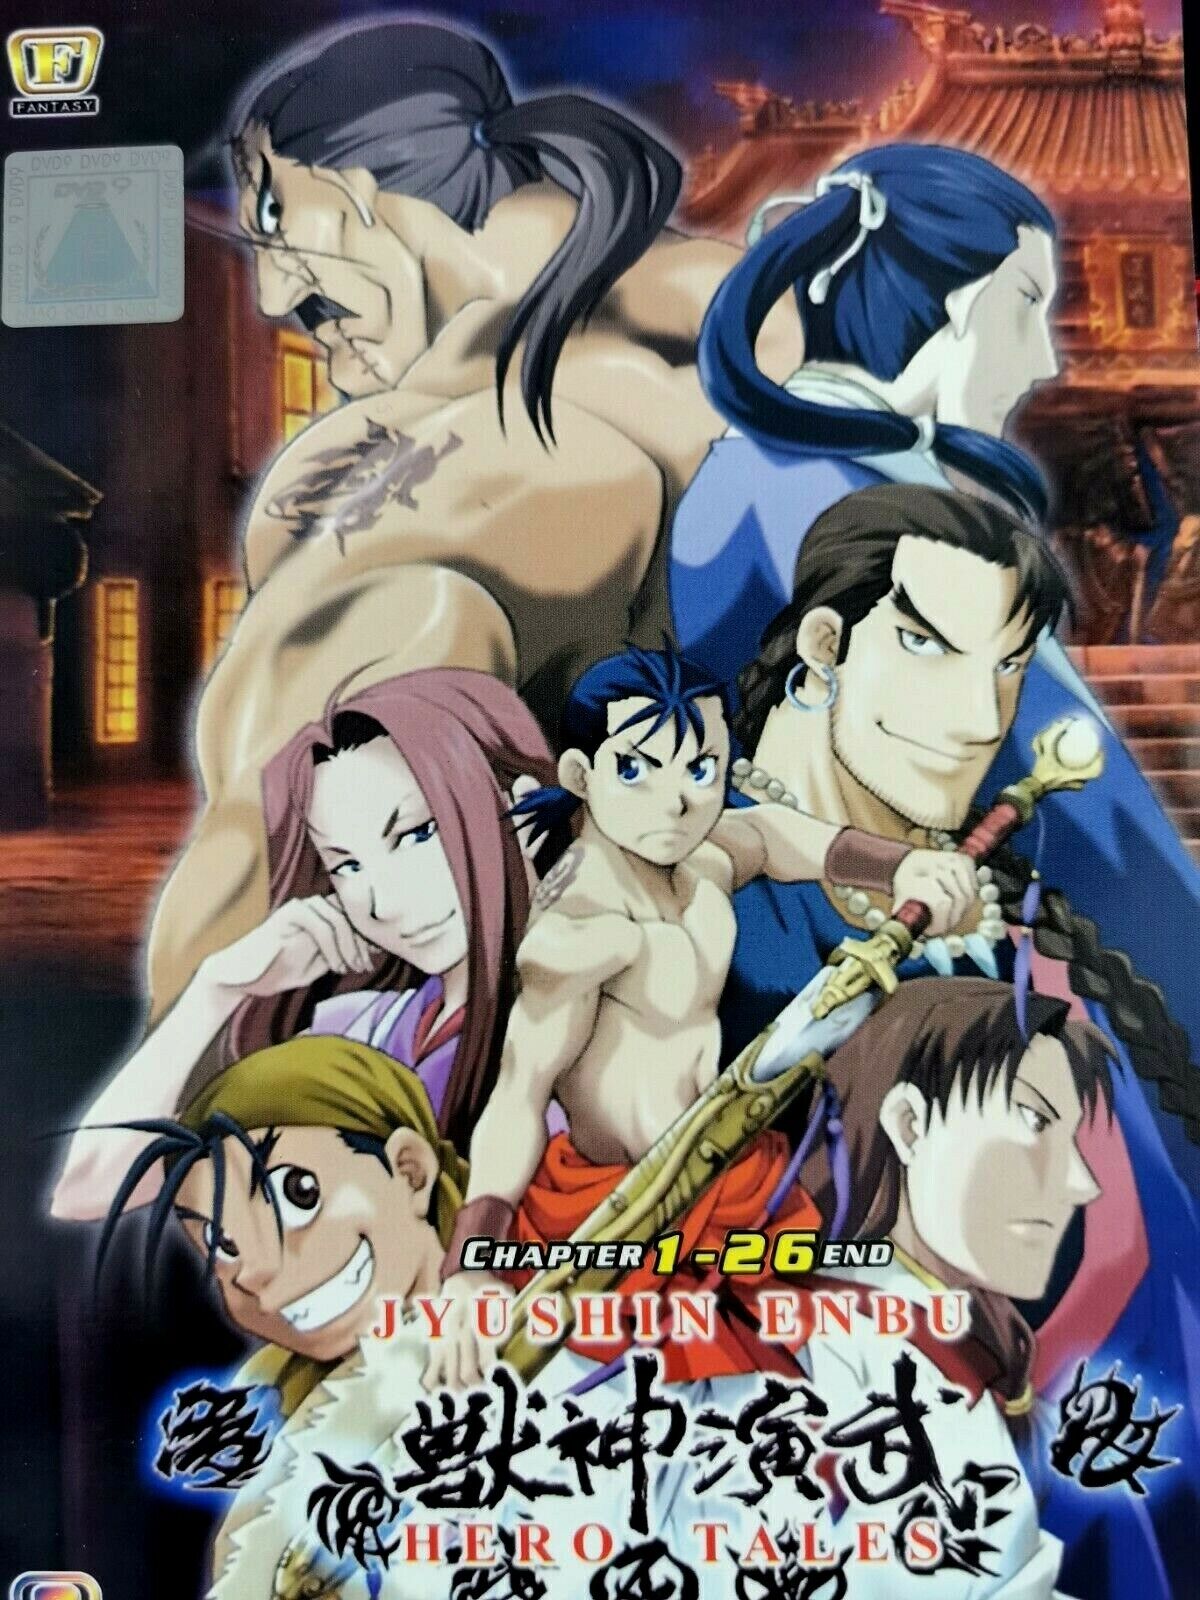 Jushin Enbu - Hero Tales Part 1 (DVD IMPORT) ~Previously Viewed~